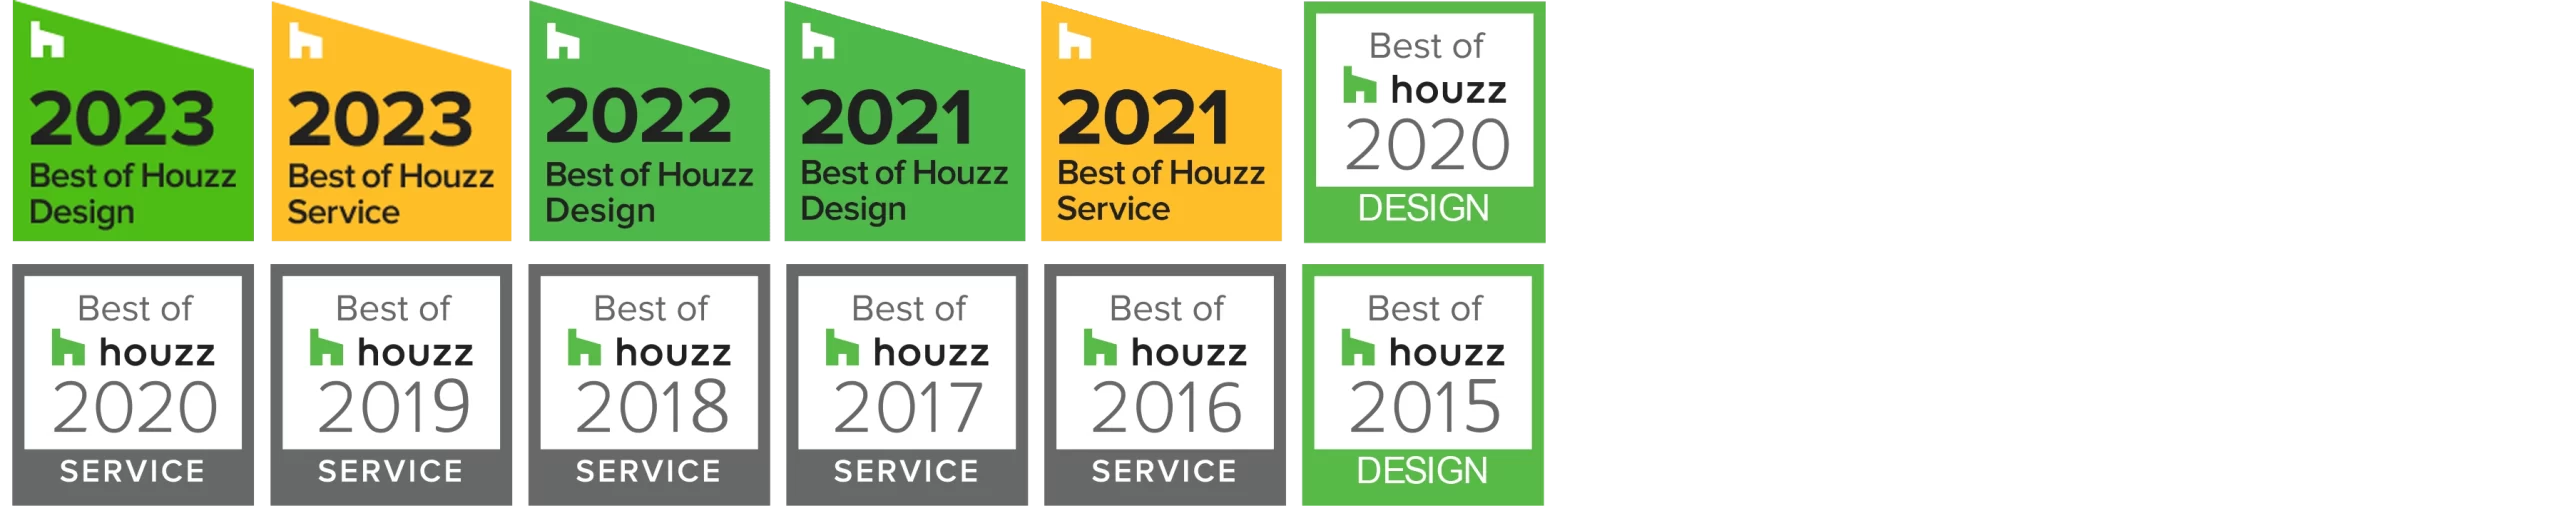 Best of Houzz logos